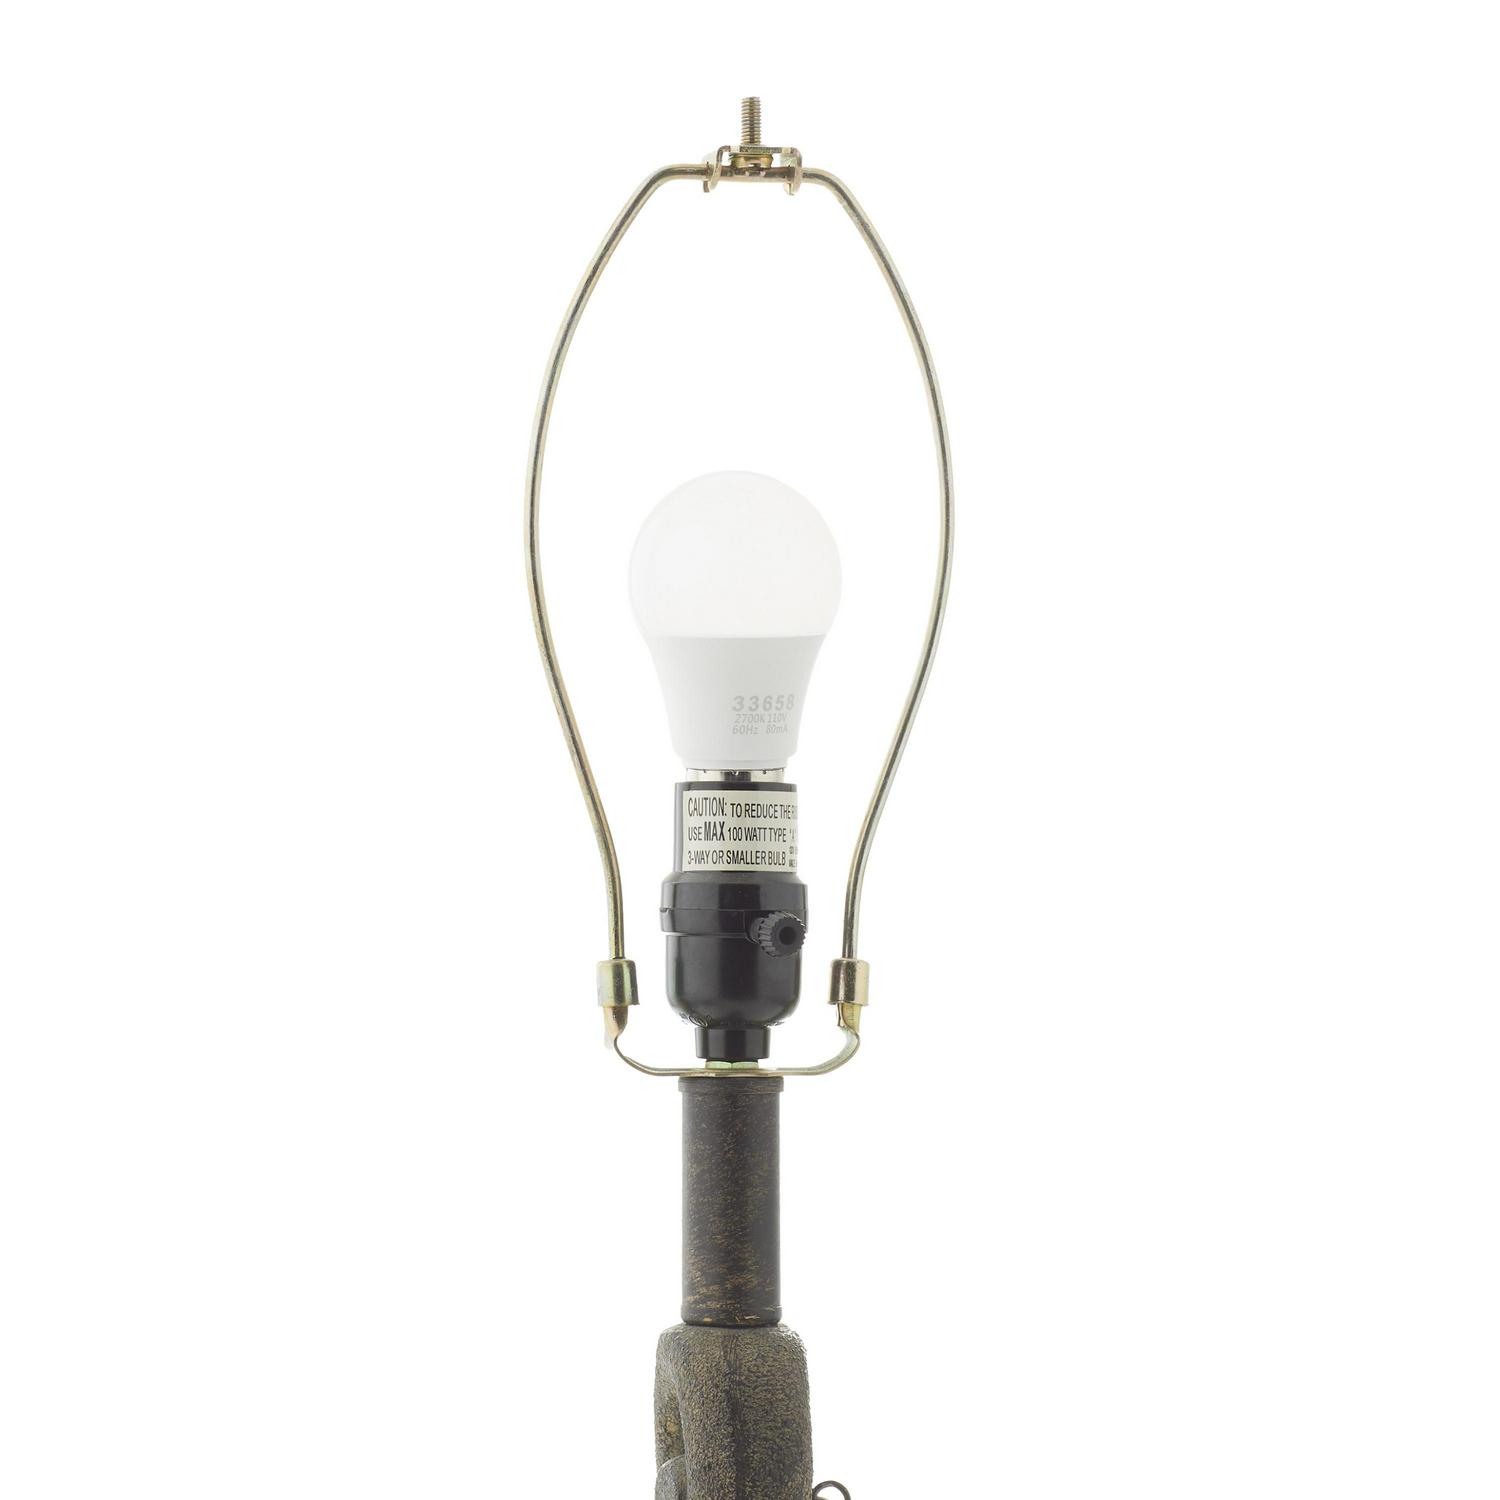 DecMode Brown Polystone Nautical Table Lamp 28 ， Set of 2